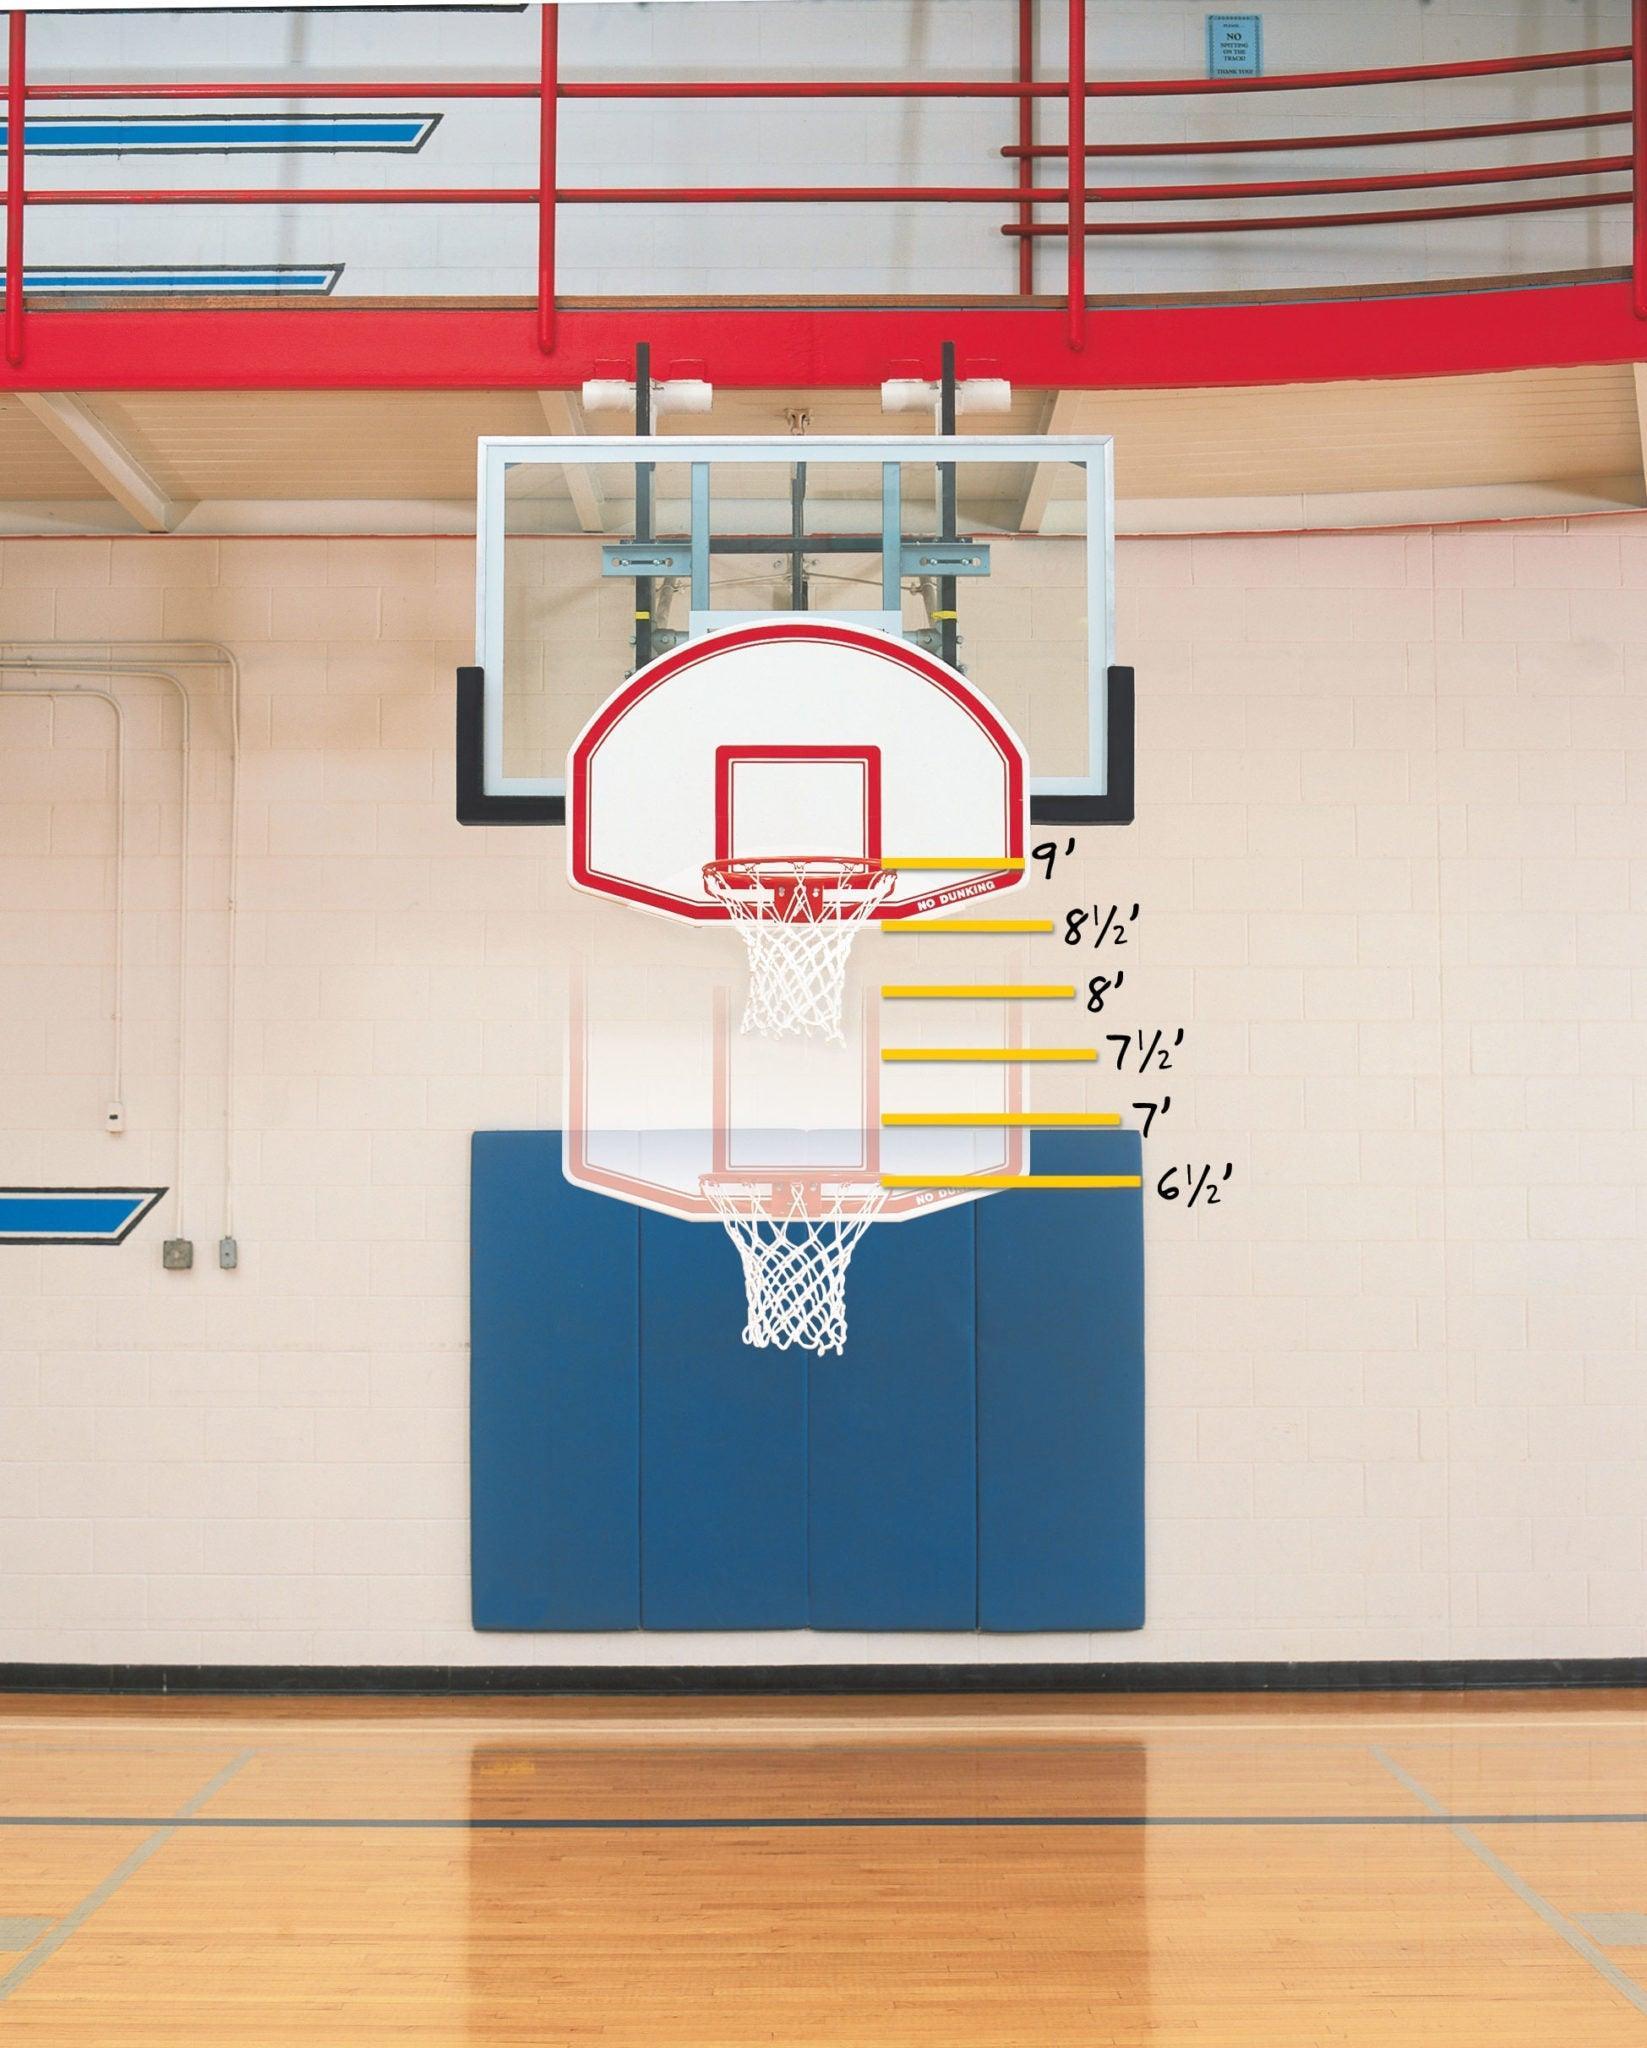 Junior Basketball Hoop System | Baller Mini Hoop